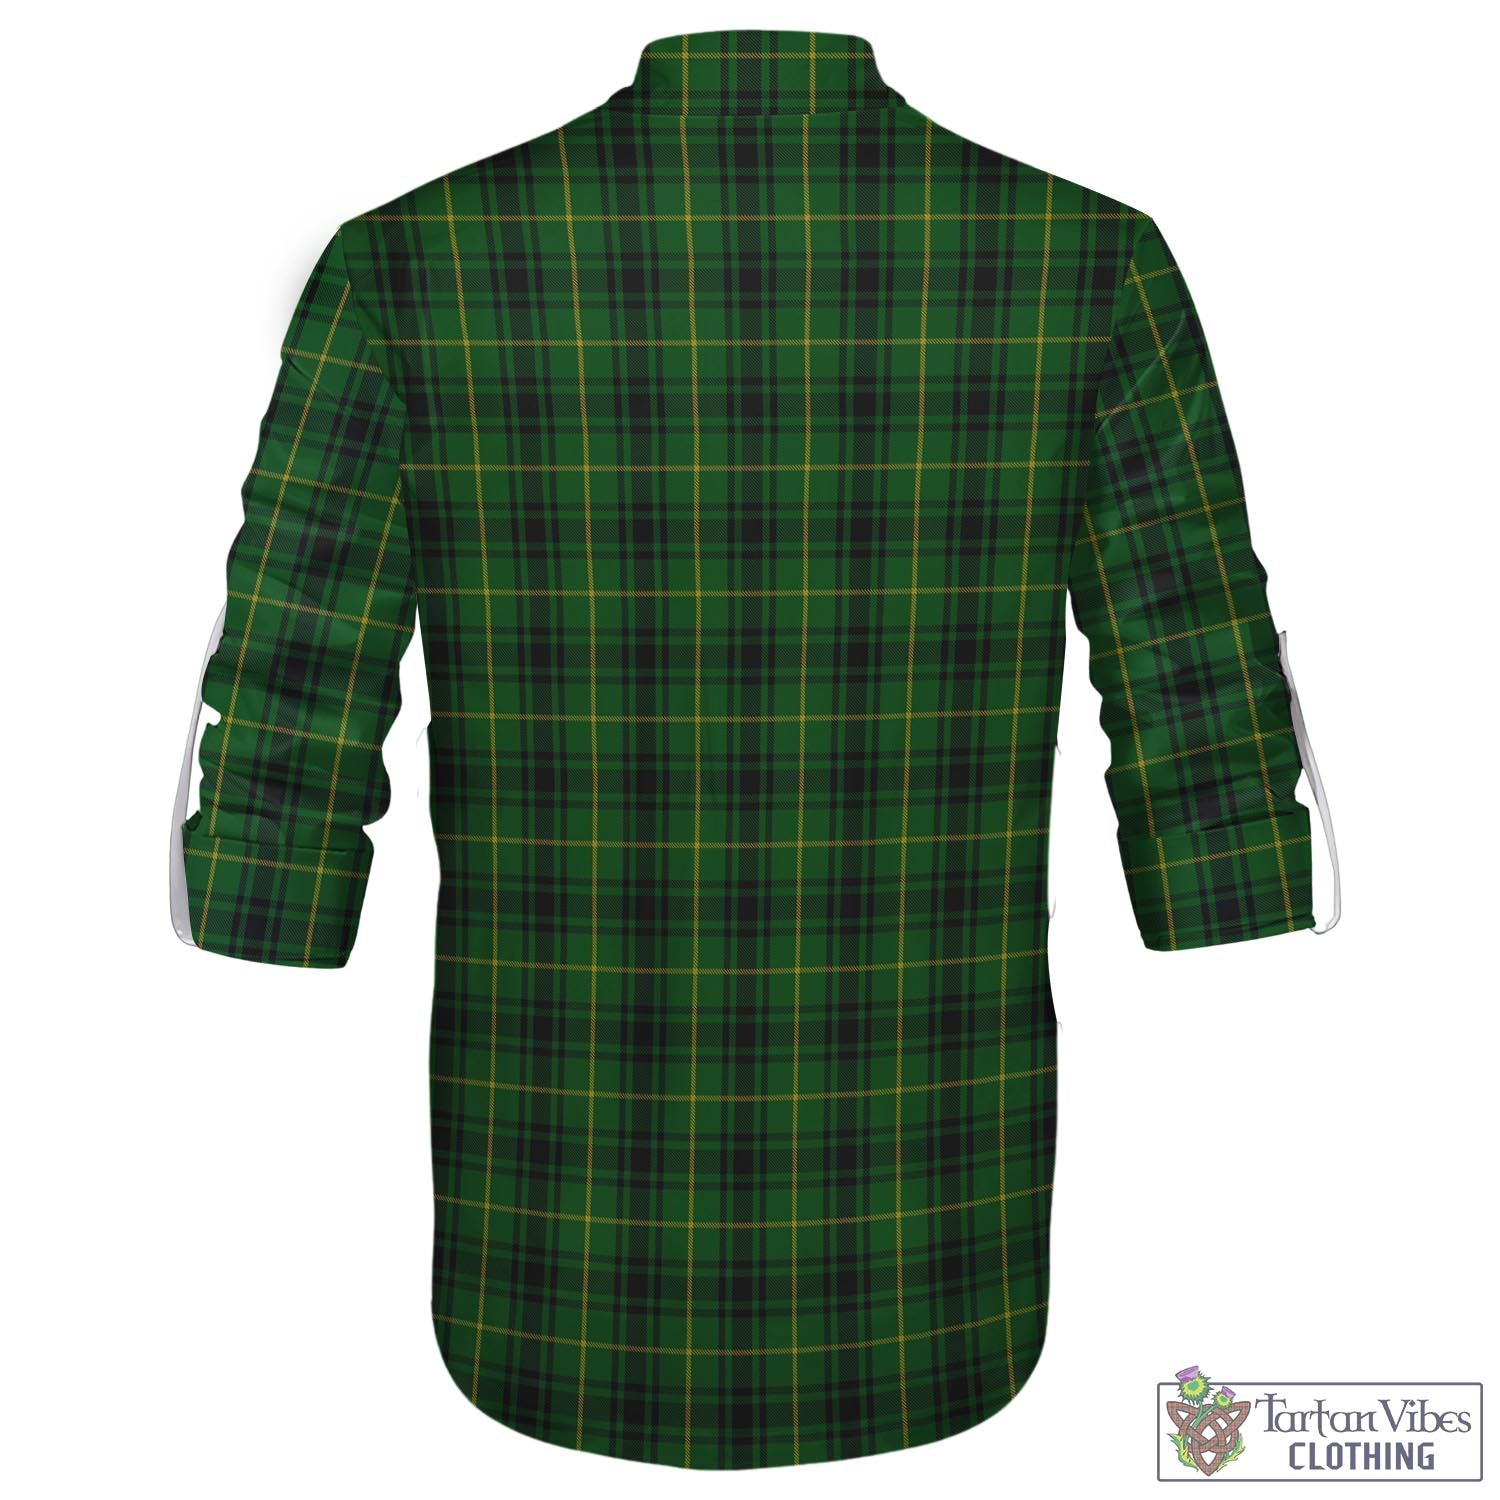 Tartan Vibes Clothing MacArthur Tartan Men's Scottish Traditional Jacobite Ghillie Kilt Shirt with Family Crest